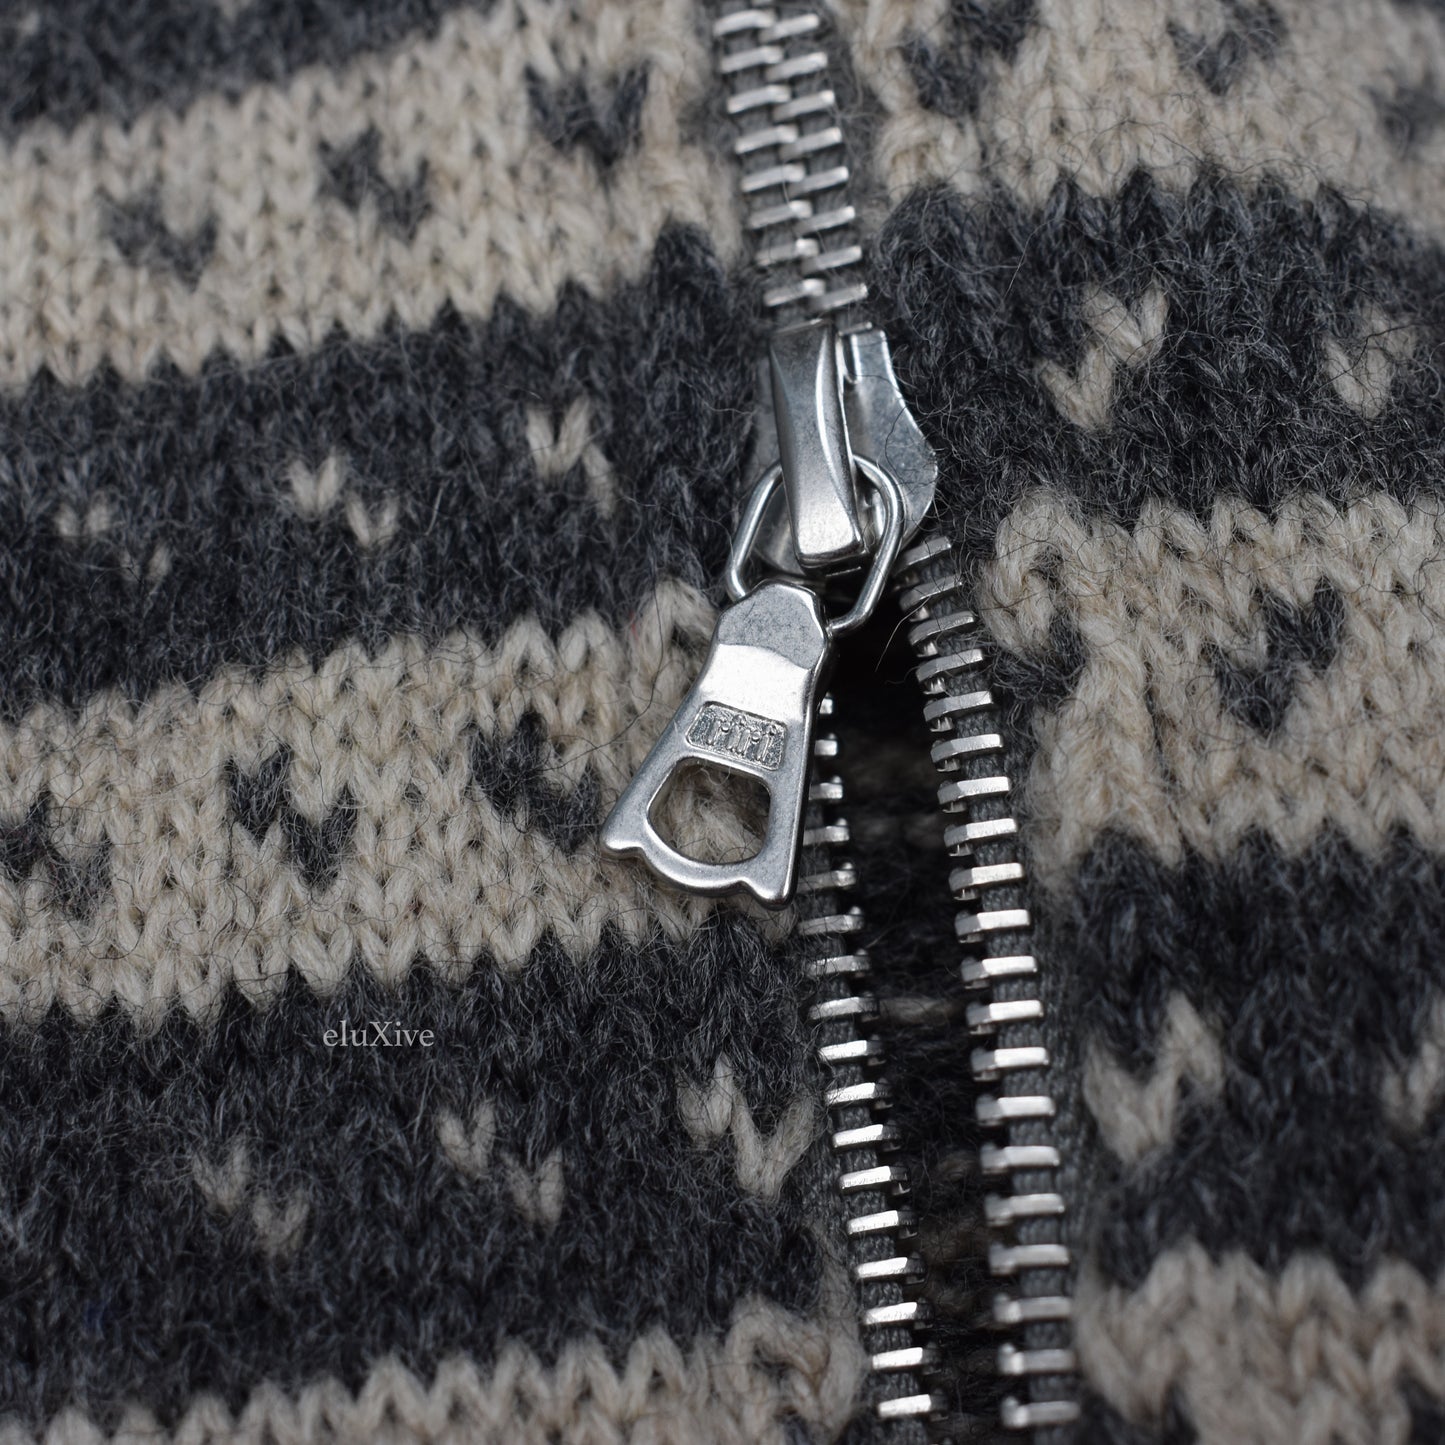 Dries Van Noten - Fair Isle Knit Zip-Up Sweater